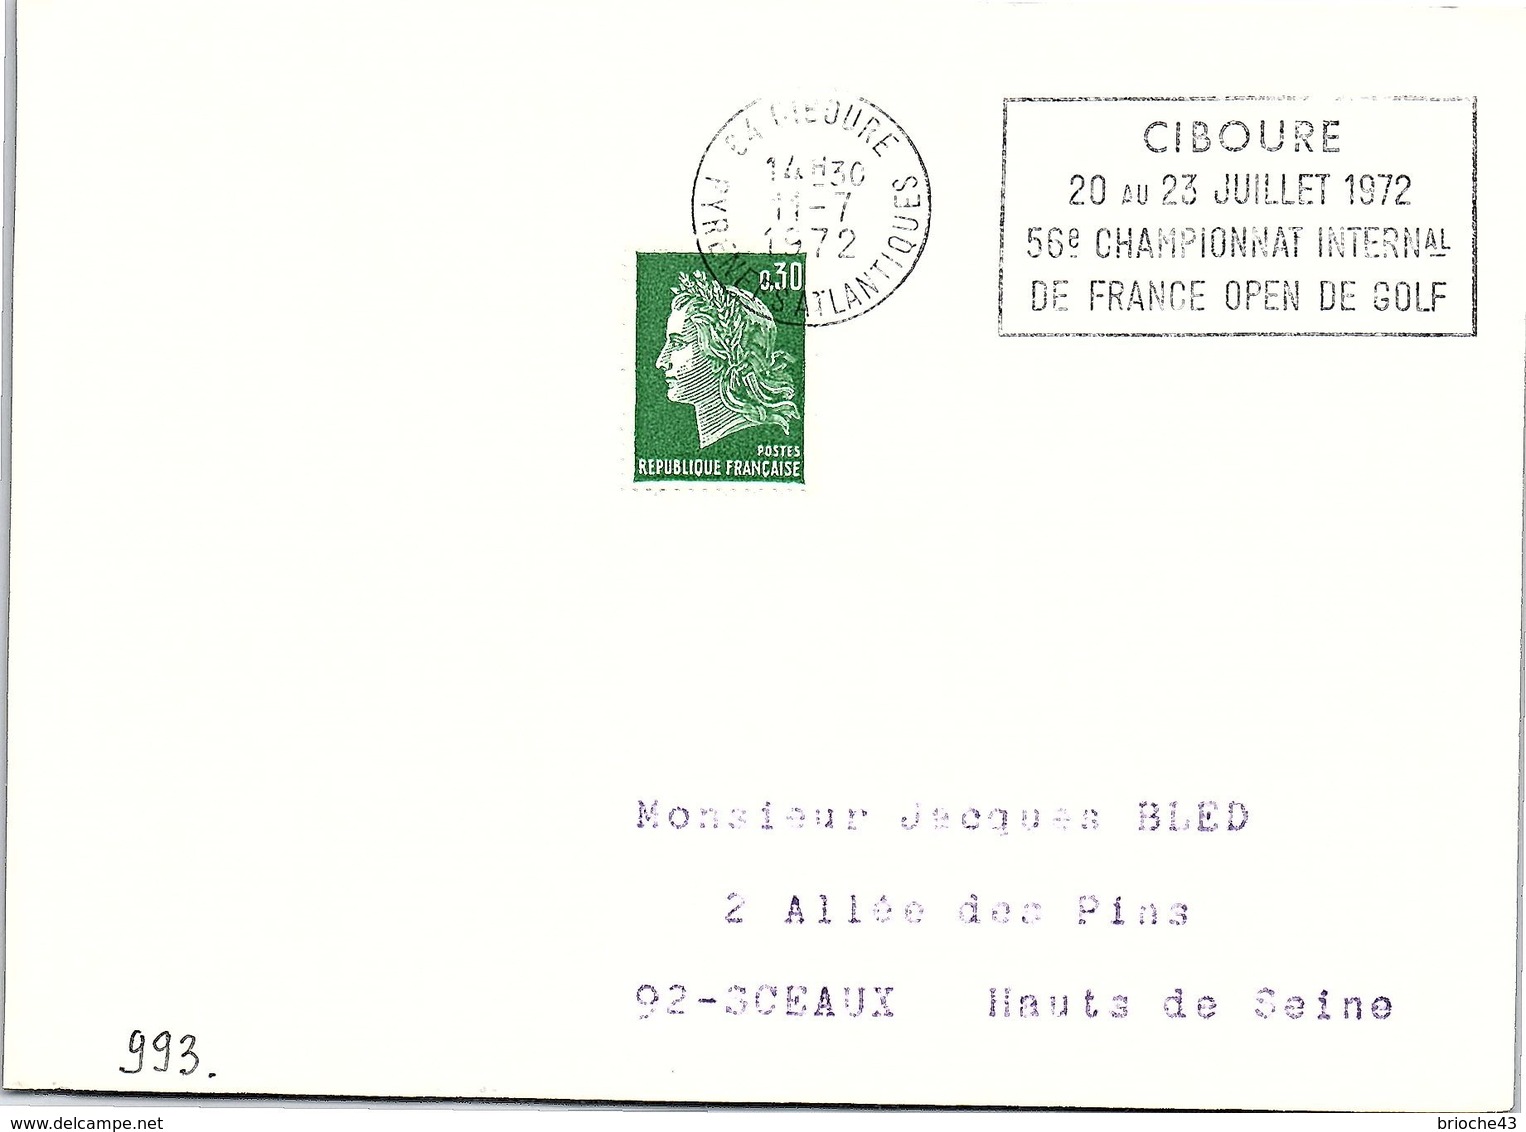 SPORTS  - CIBOURE 20-23 JUILLET 1972 56e CHAMPIONNAT INTERNATIONAL DE FRANCE OPEN DE GOLF - 11.7.1972 PYR. ATL.    / 1 - Commemorative Postmarks